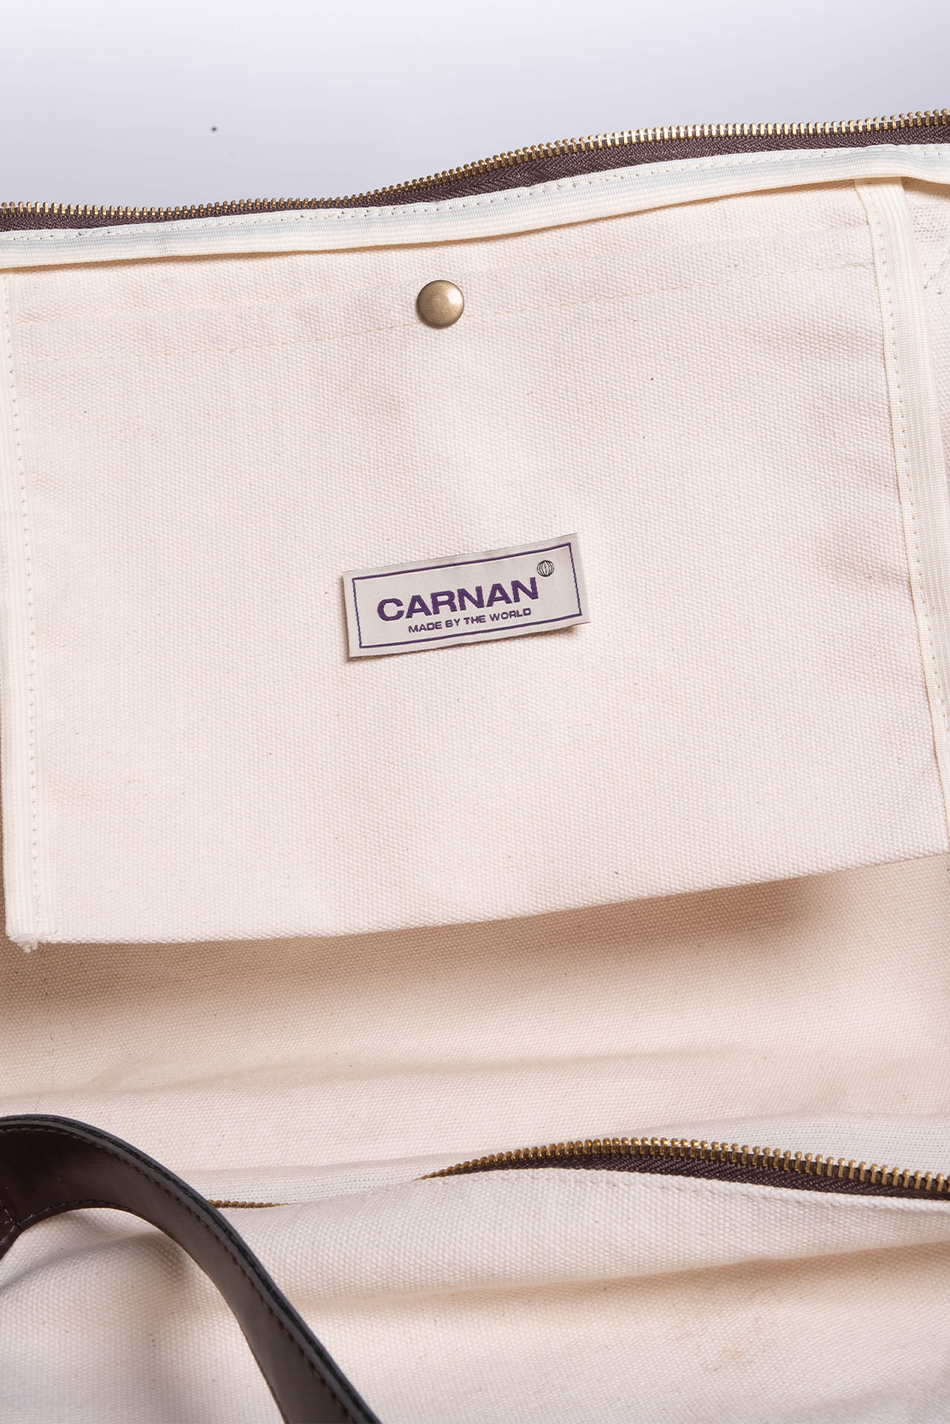 Carnan Duffel Bag